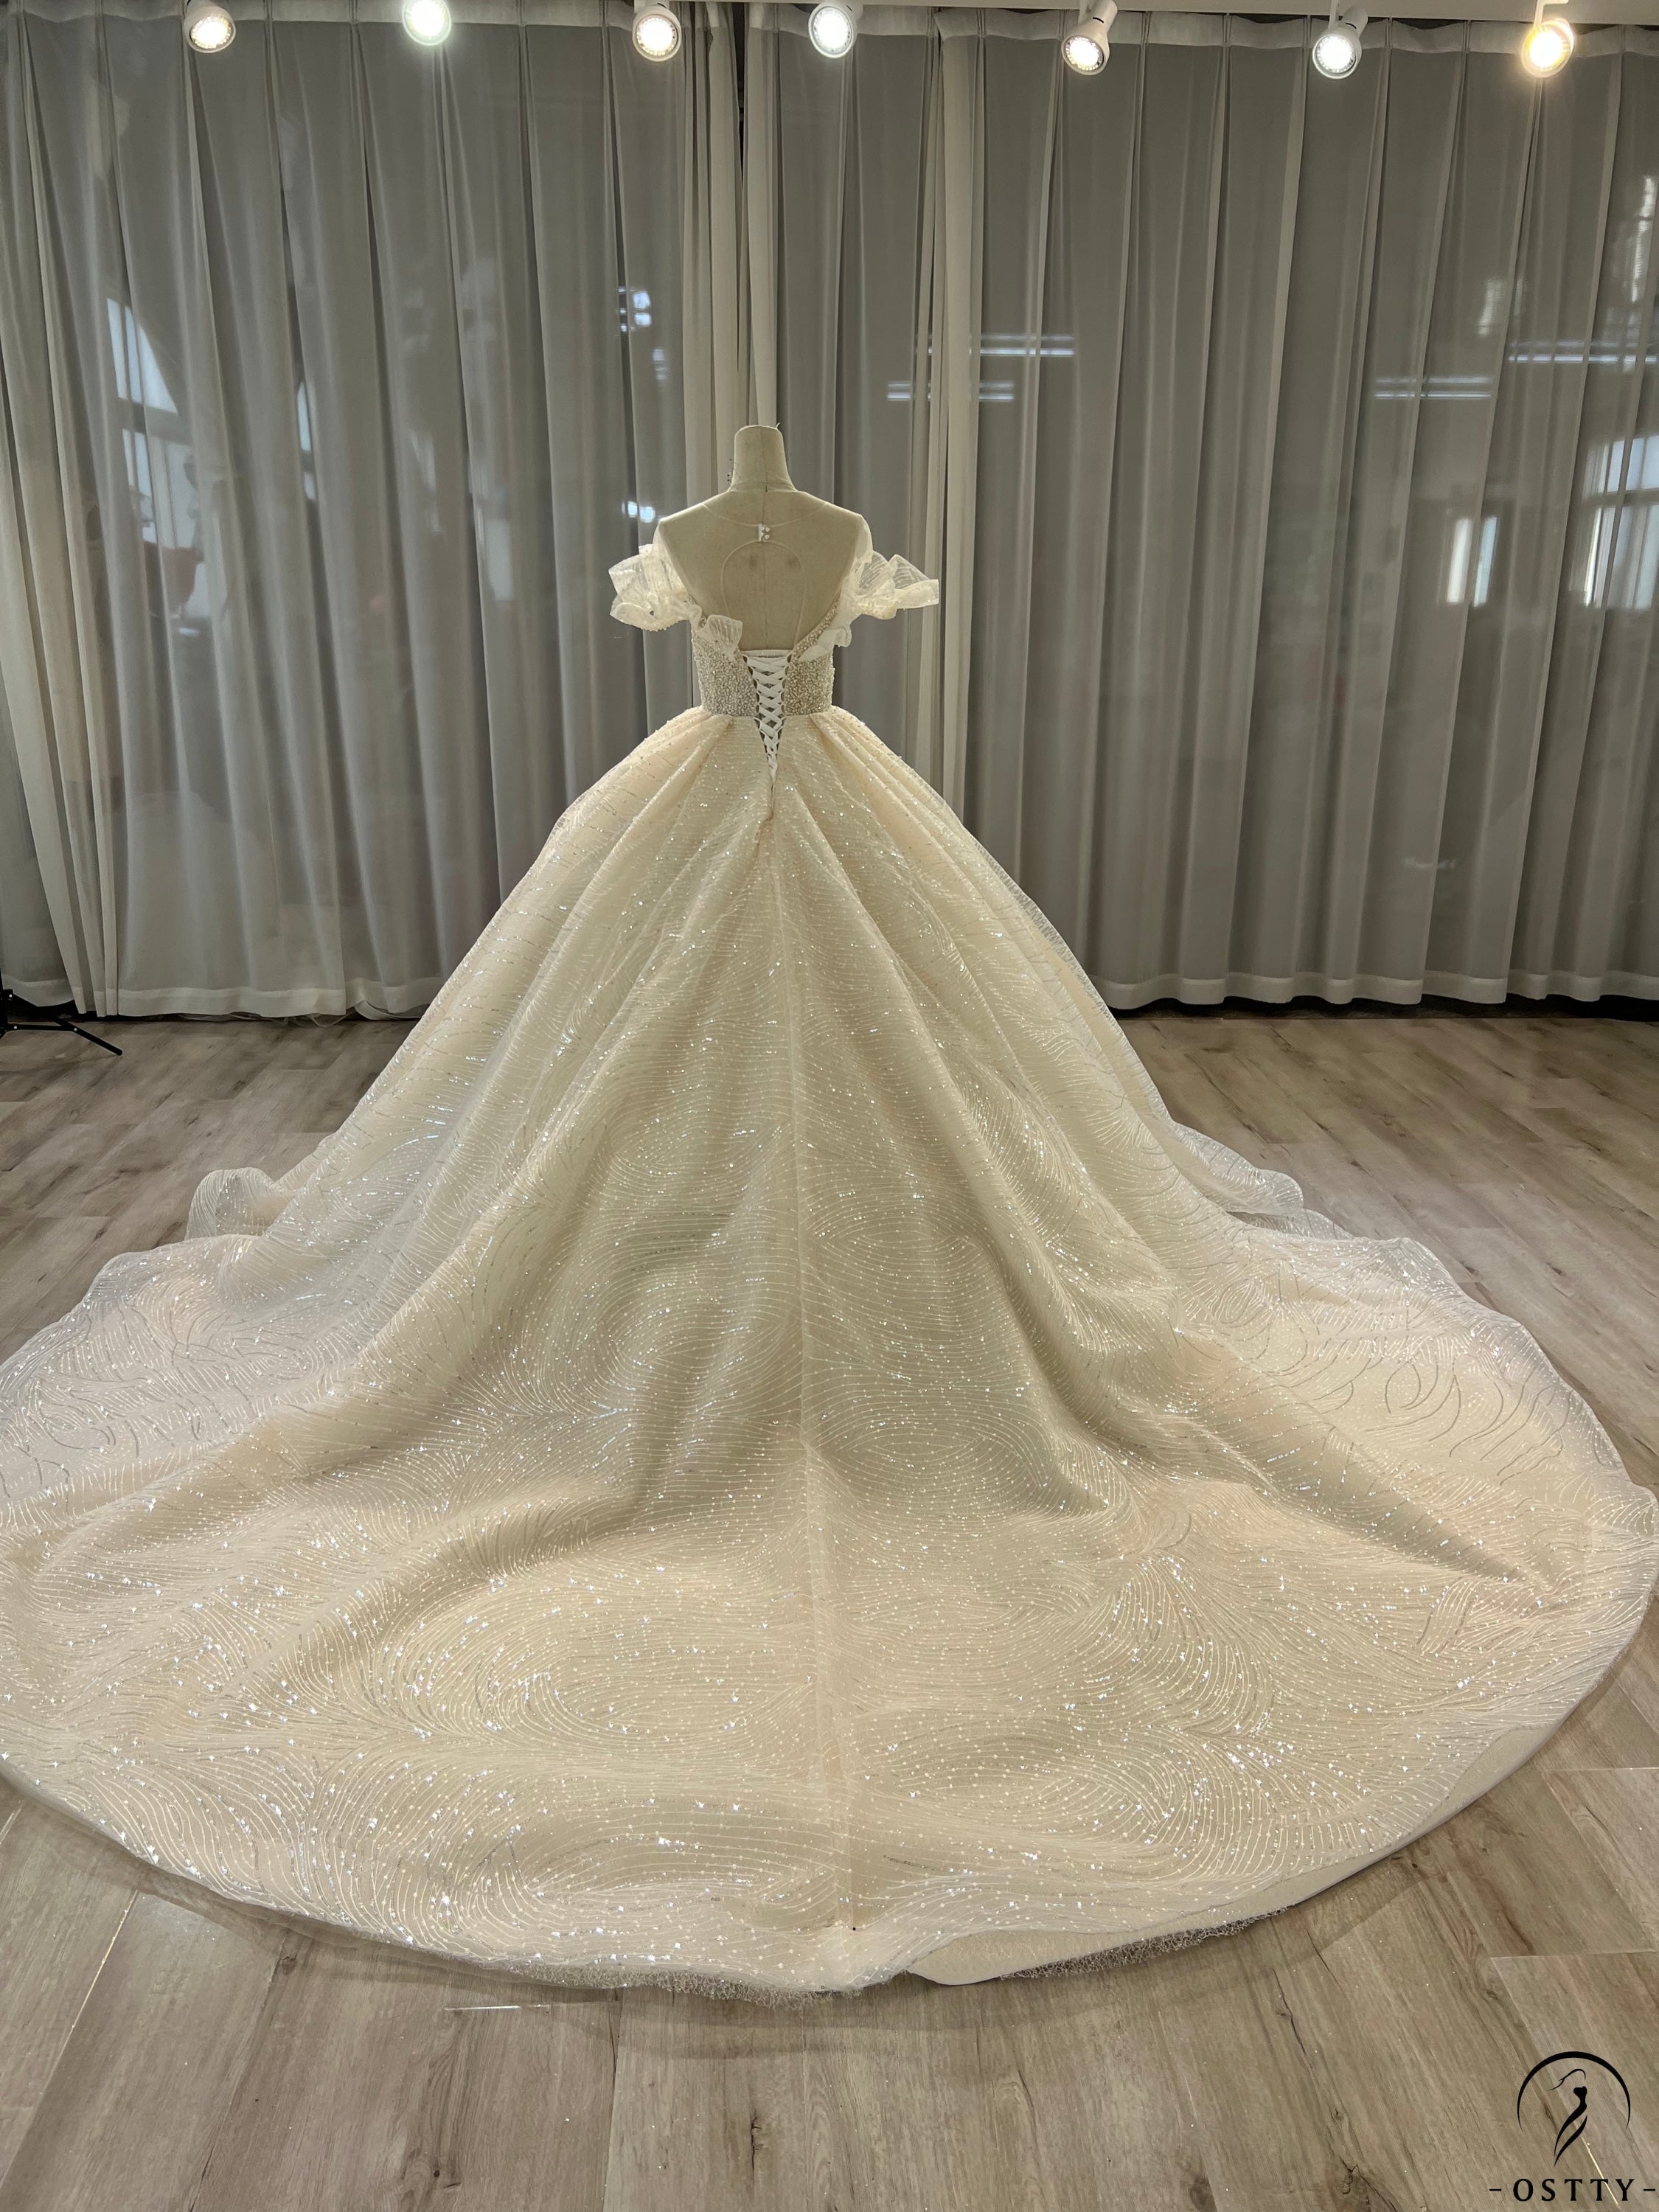 Ostty Luxury Champagne Short Sleeves Wedding Dress - Quinceanera Dress $1,299